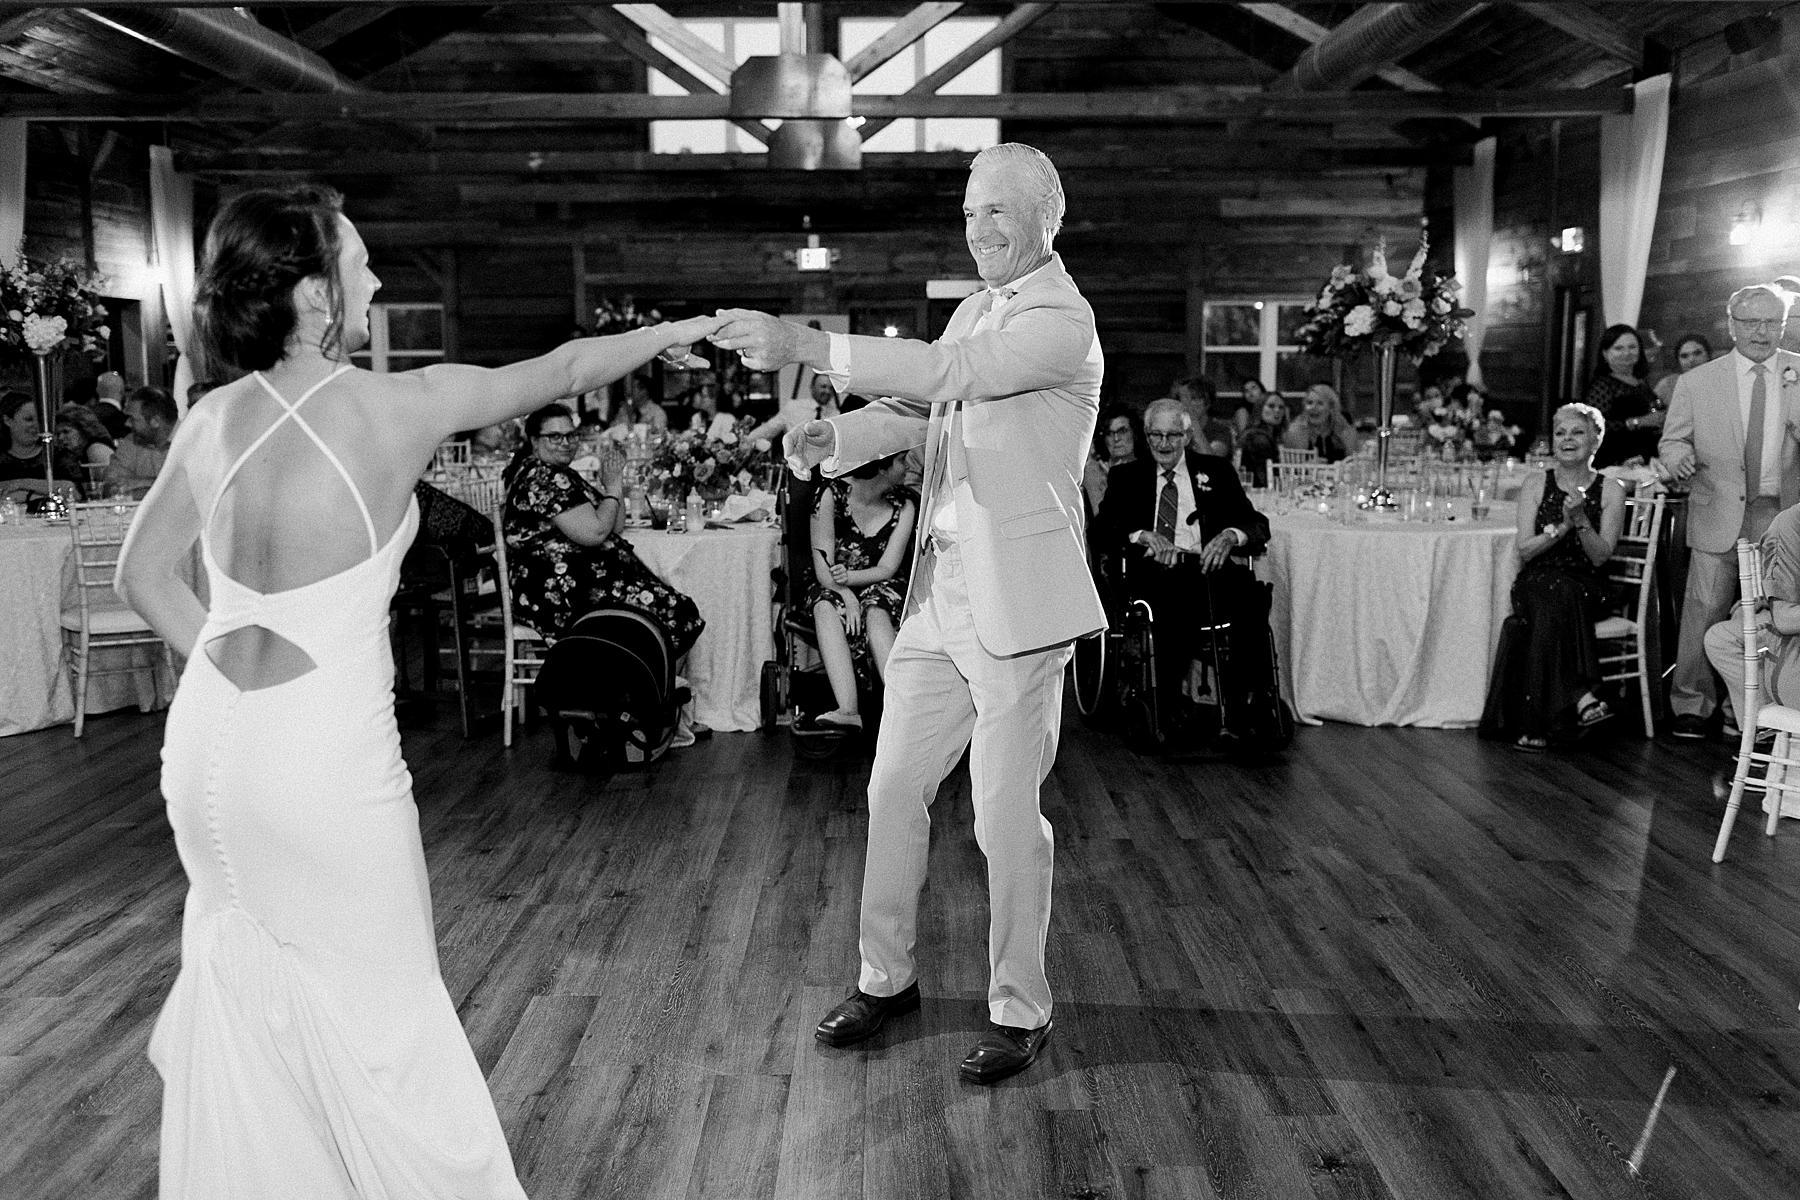 dancing at barn wedding fields reserve near madison, wisconsin